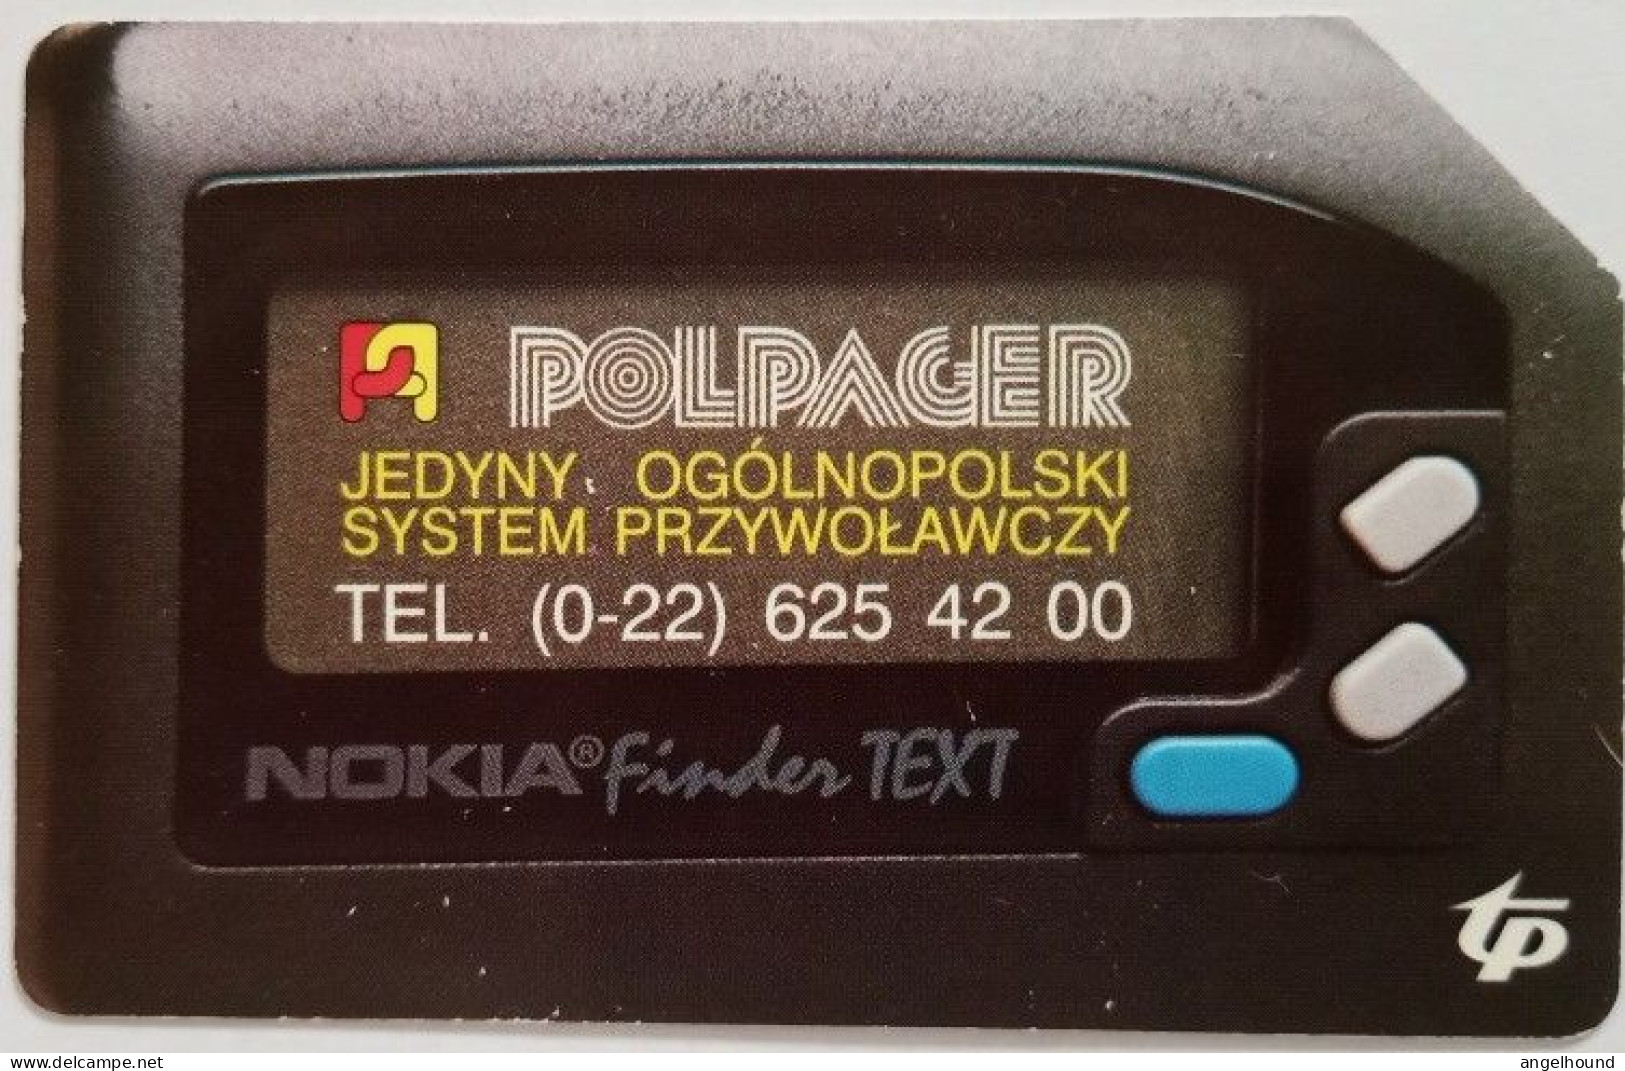 Poland 25 Units Urmet Card -  Nokia Polpager - Poland